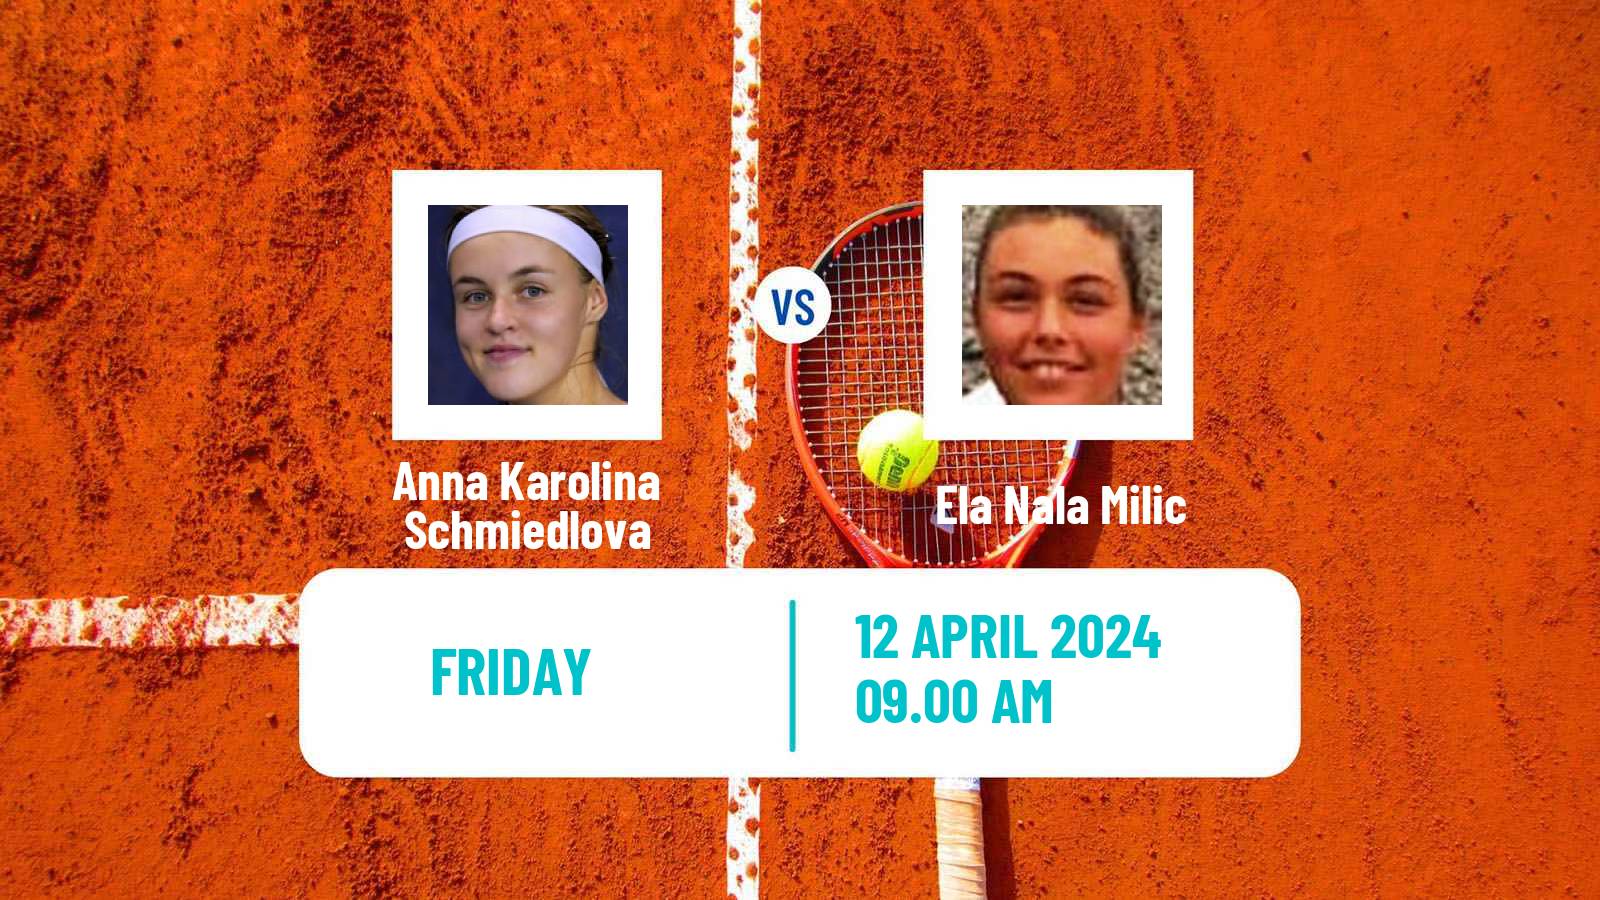 Tennis WTA Billie Jean King Cup World Group Anna Karolina Schmiedlova - Ela Nala Milic